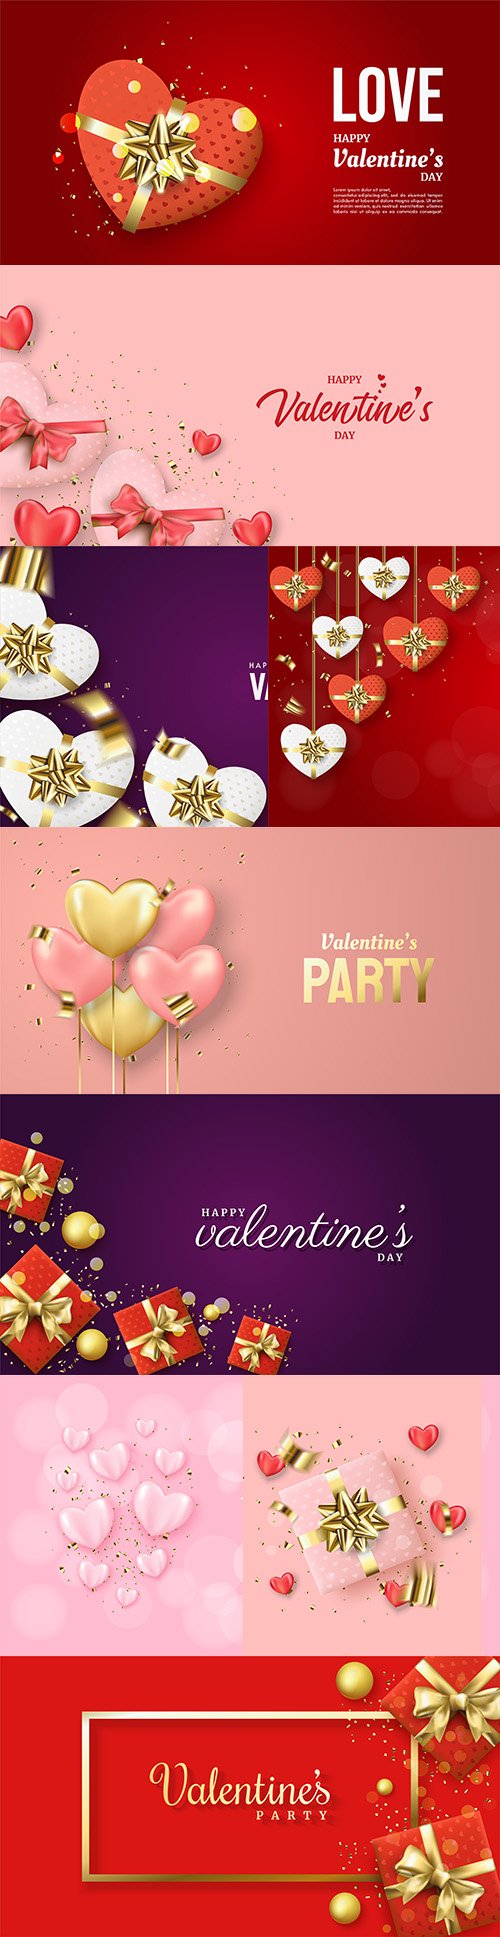 Valentine's Day romantic elements decorative illustrations 18